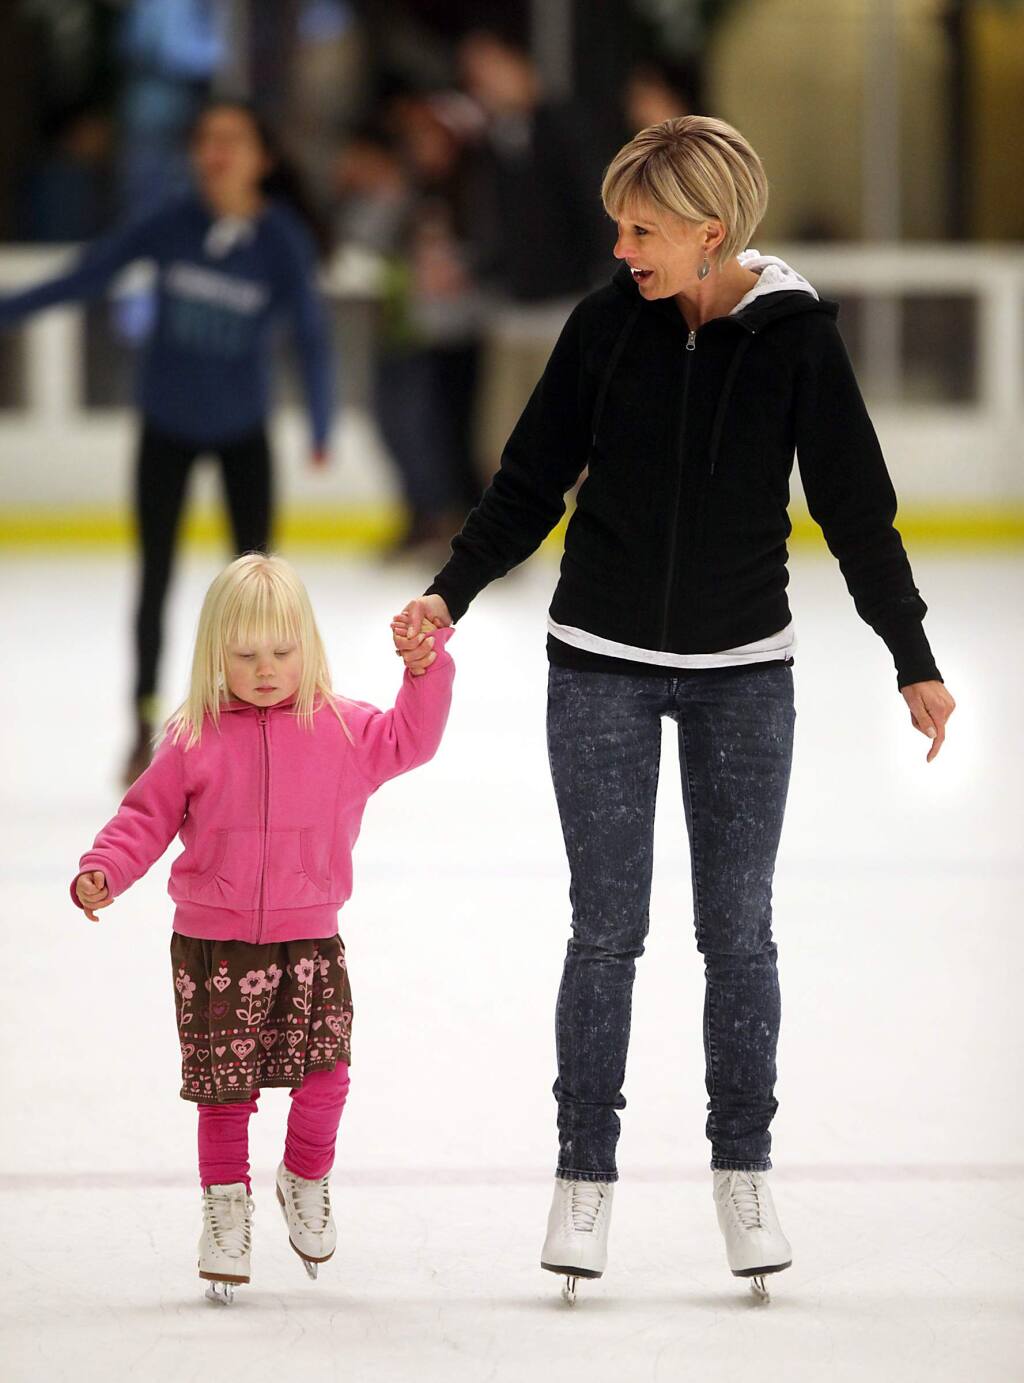 Enjoy a family skating session at Snoopy's Home Ice in Santa Rosa. (John Burgess/The Press Democrat)